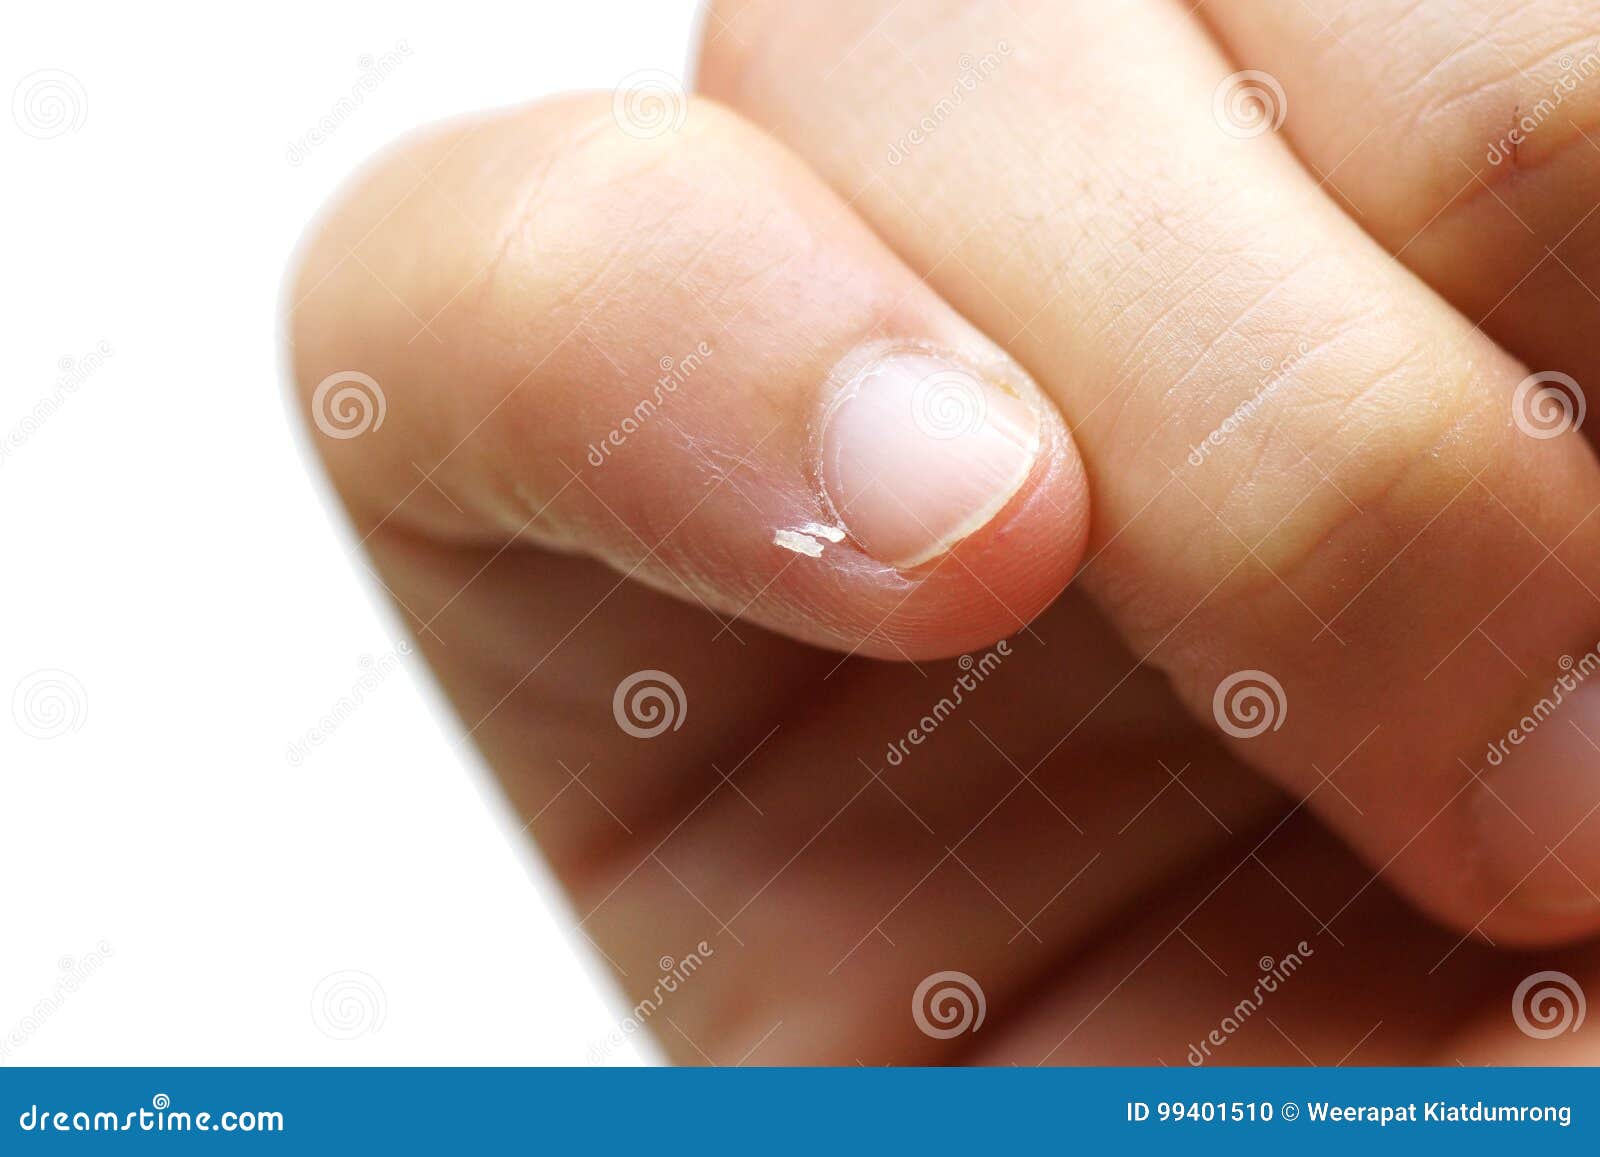 Nail skin peeling stock photo. Image of hurt, hand, peeling - 99401510